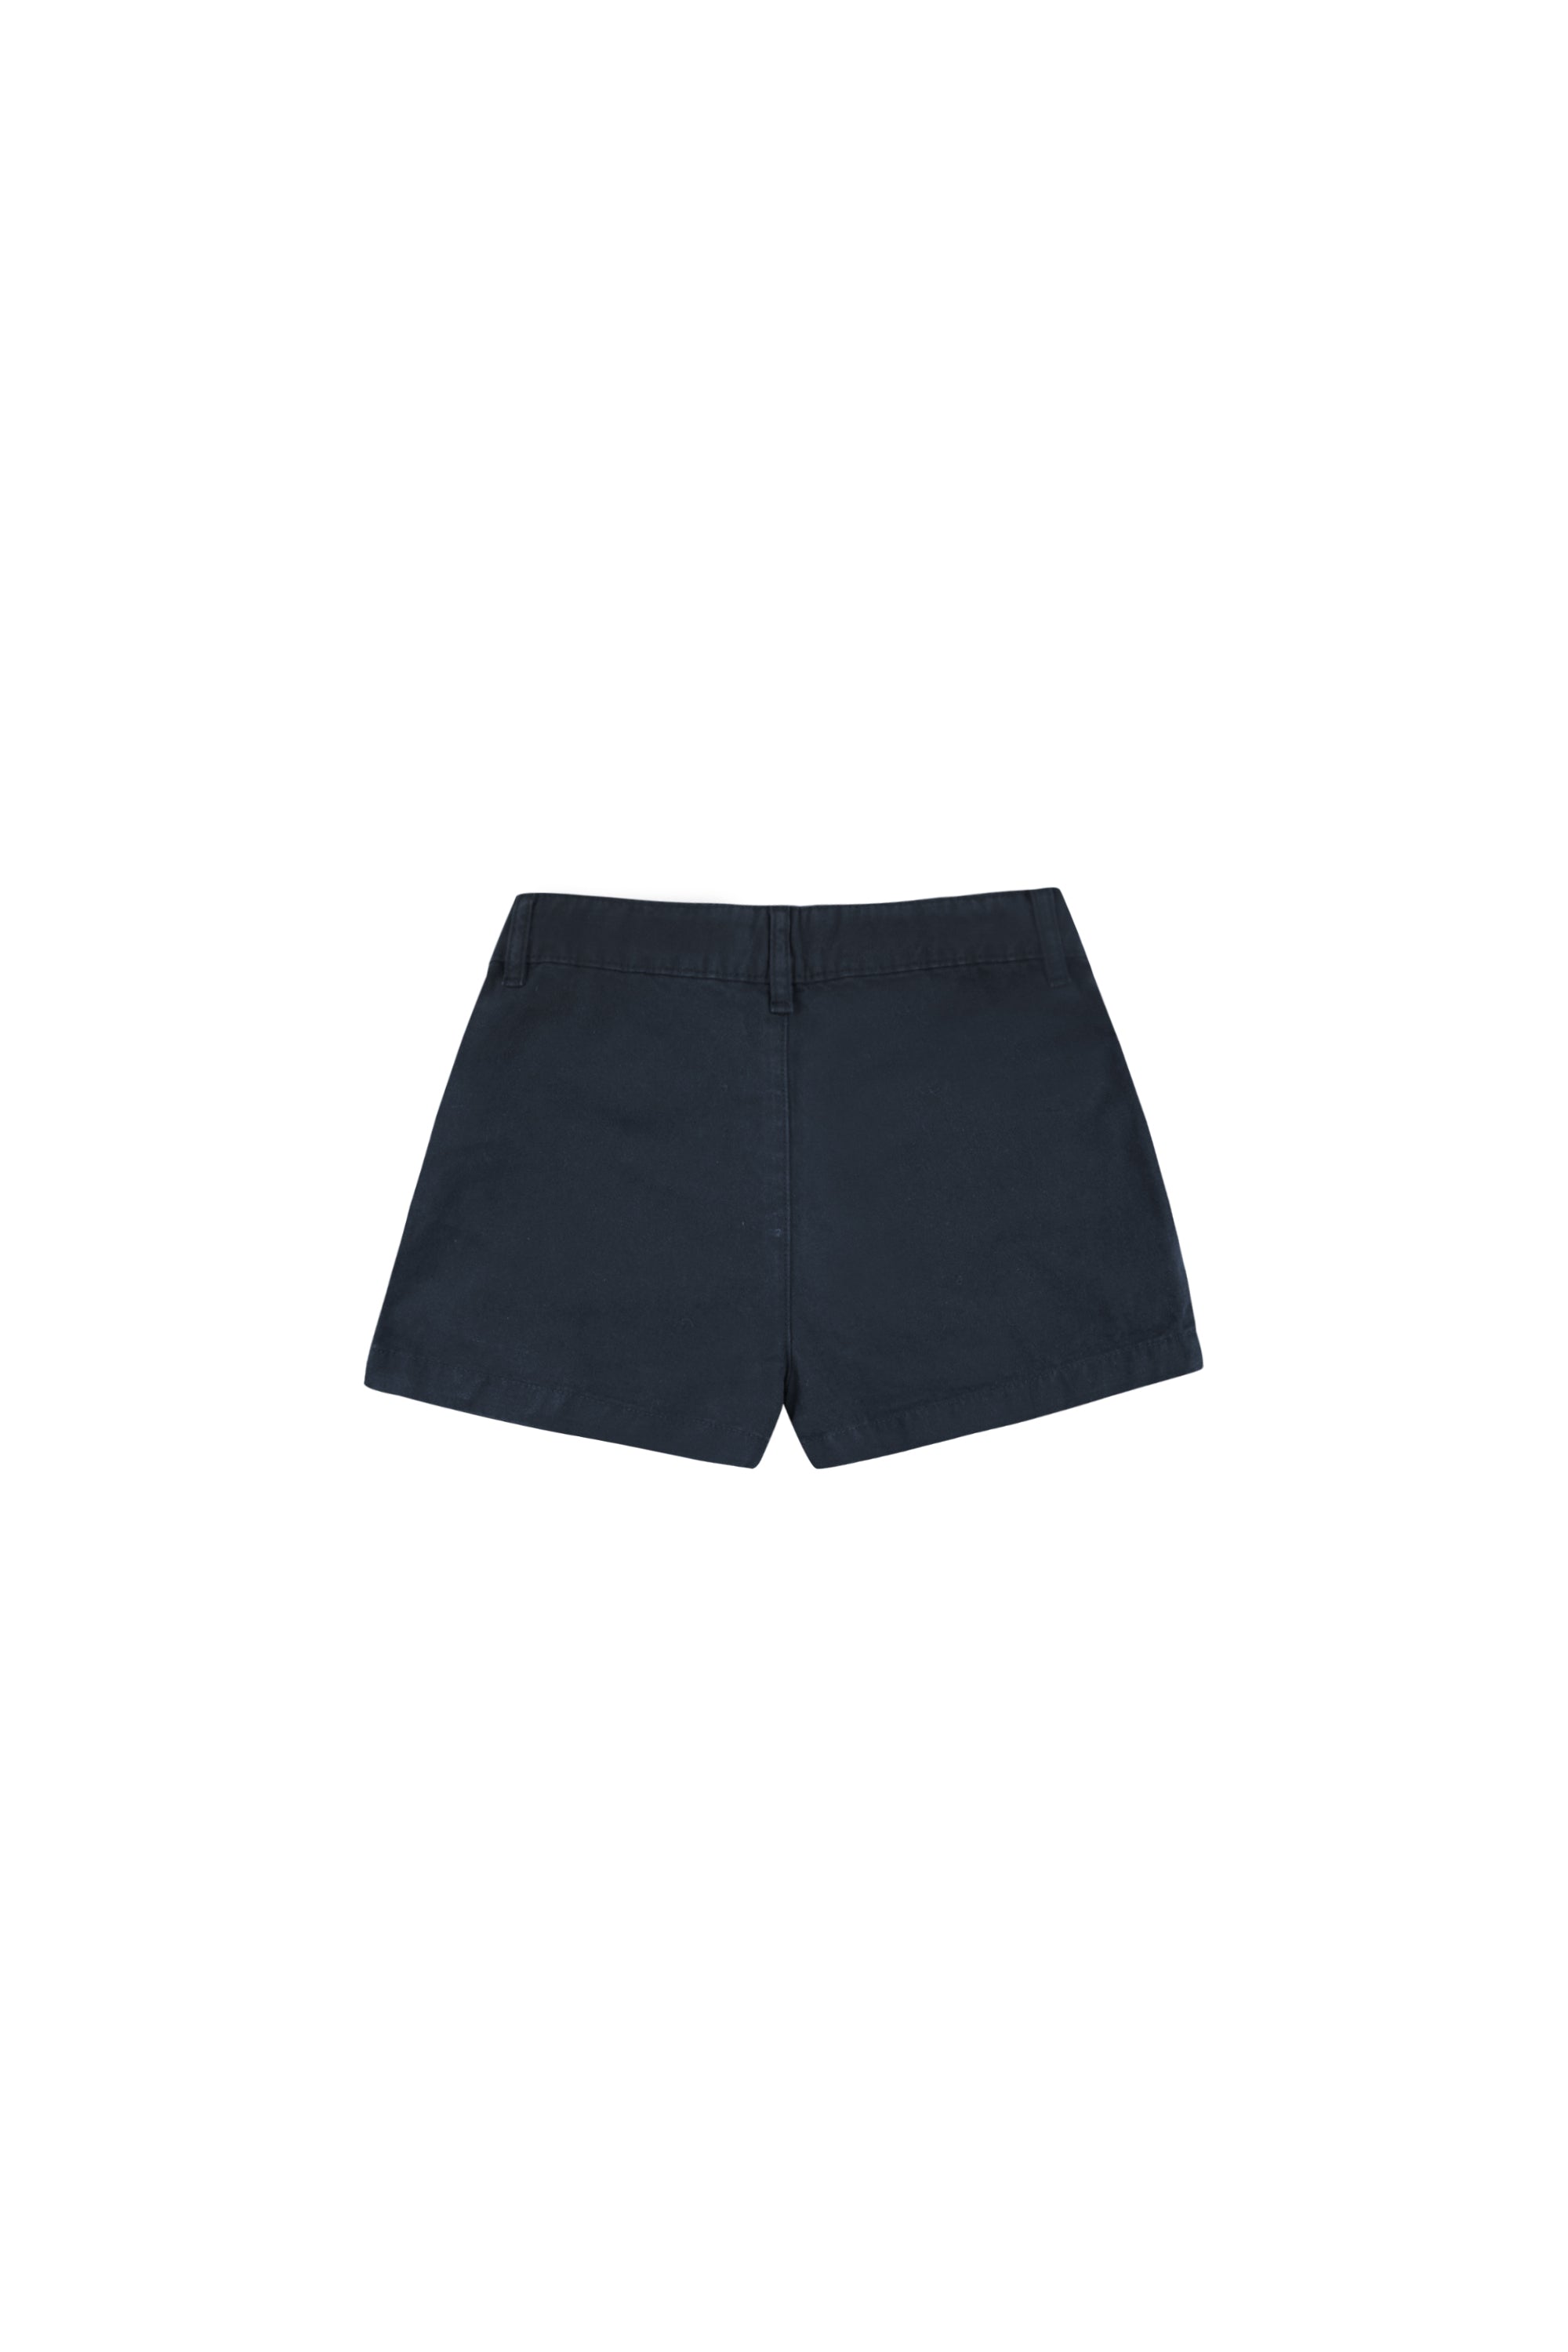 Tiny Cottons Block Party Pleat Shorts - Navy – Dreams of Cuteness